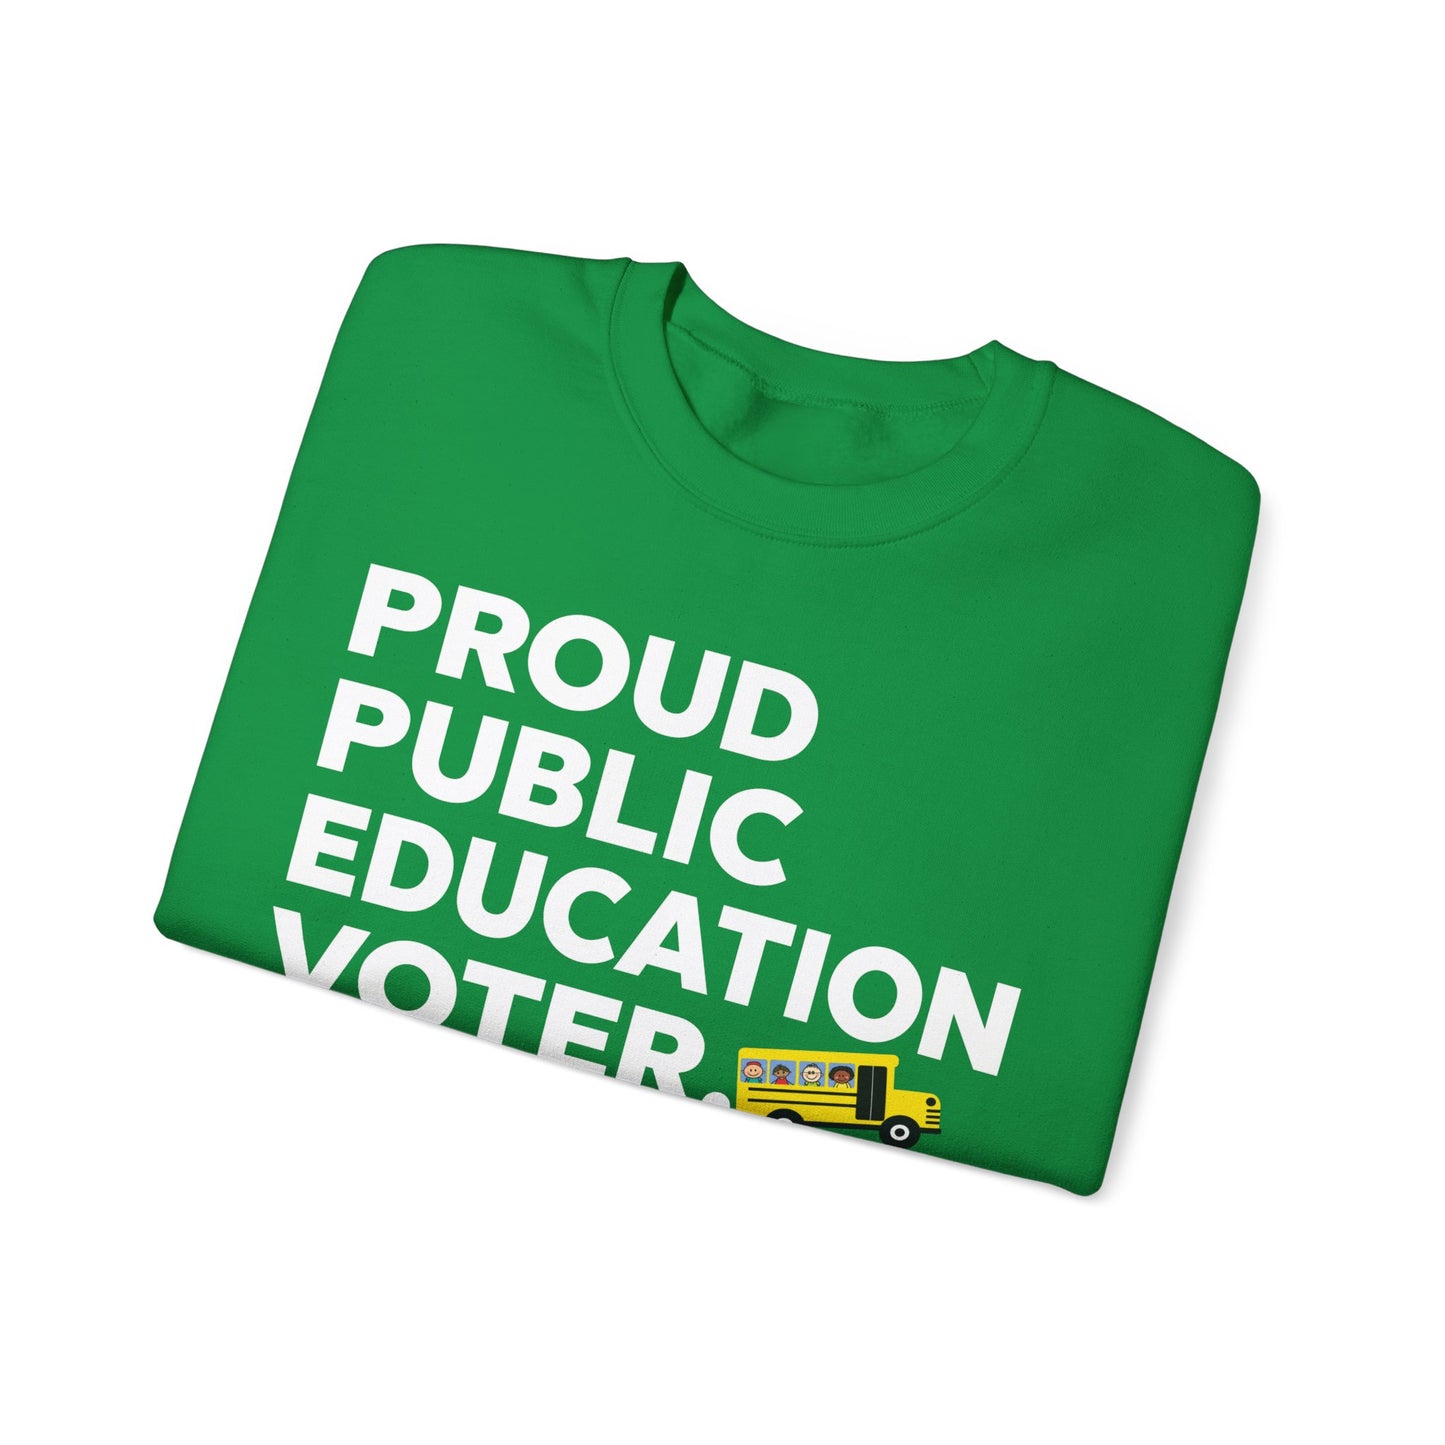 Proud Public Education Voter Sweatshirt, AR Kids Sweatshirt, School Sweater